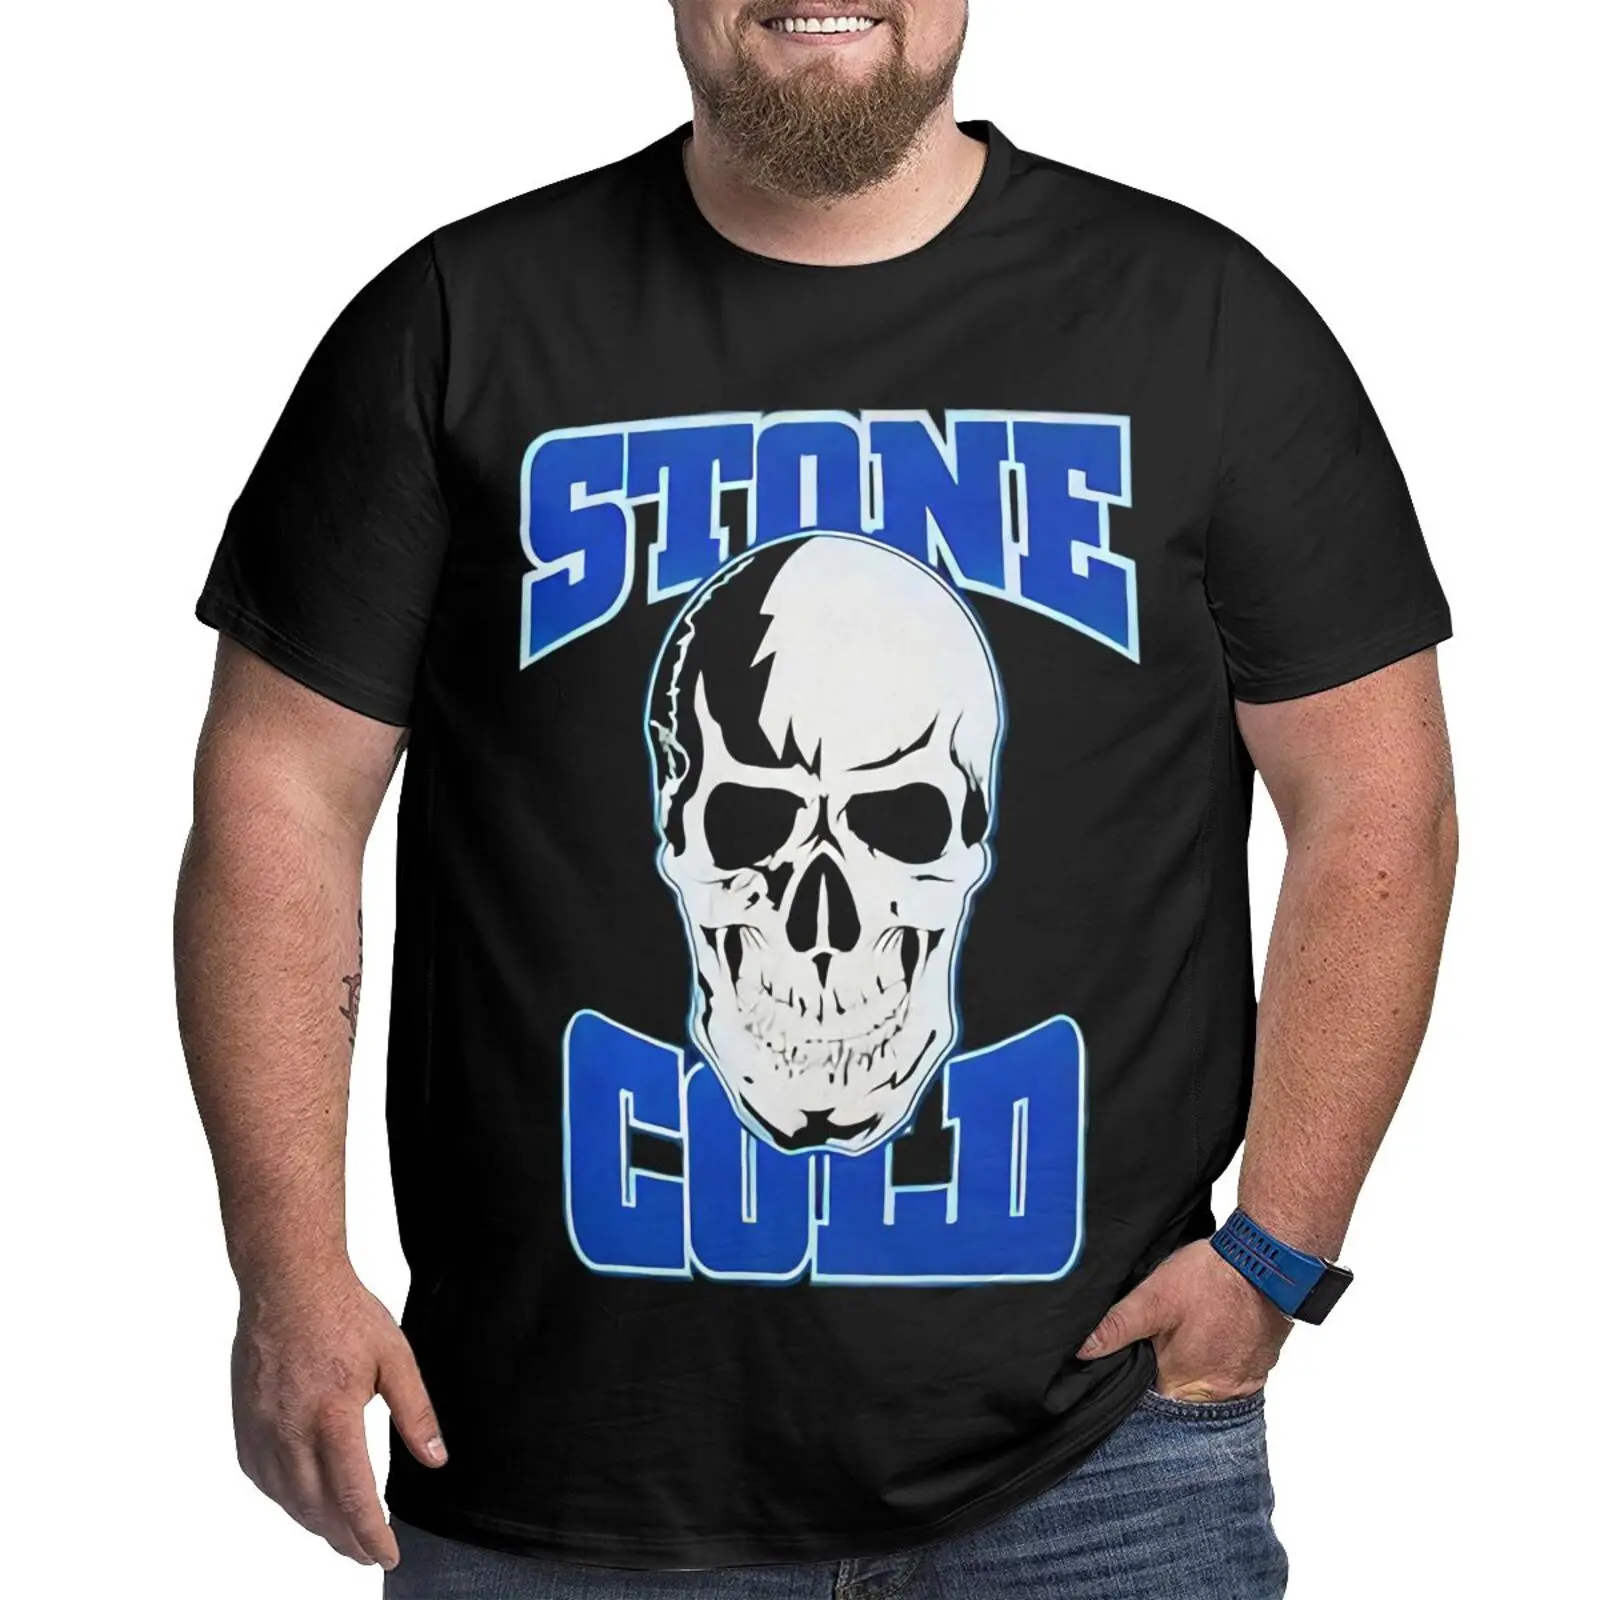 

Wwe Stone Cold Стив Остин, футболка большого размера, футболка для мужчин, футболка для женщин, Мужская одежда, футболка, мужские футболки